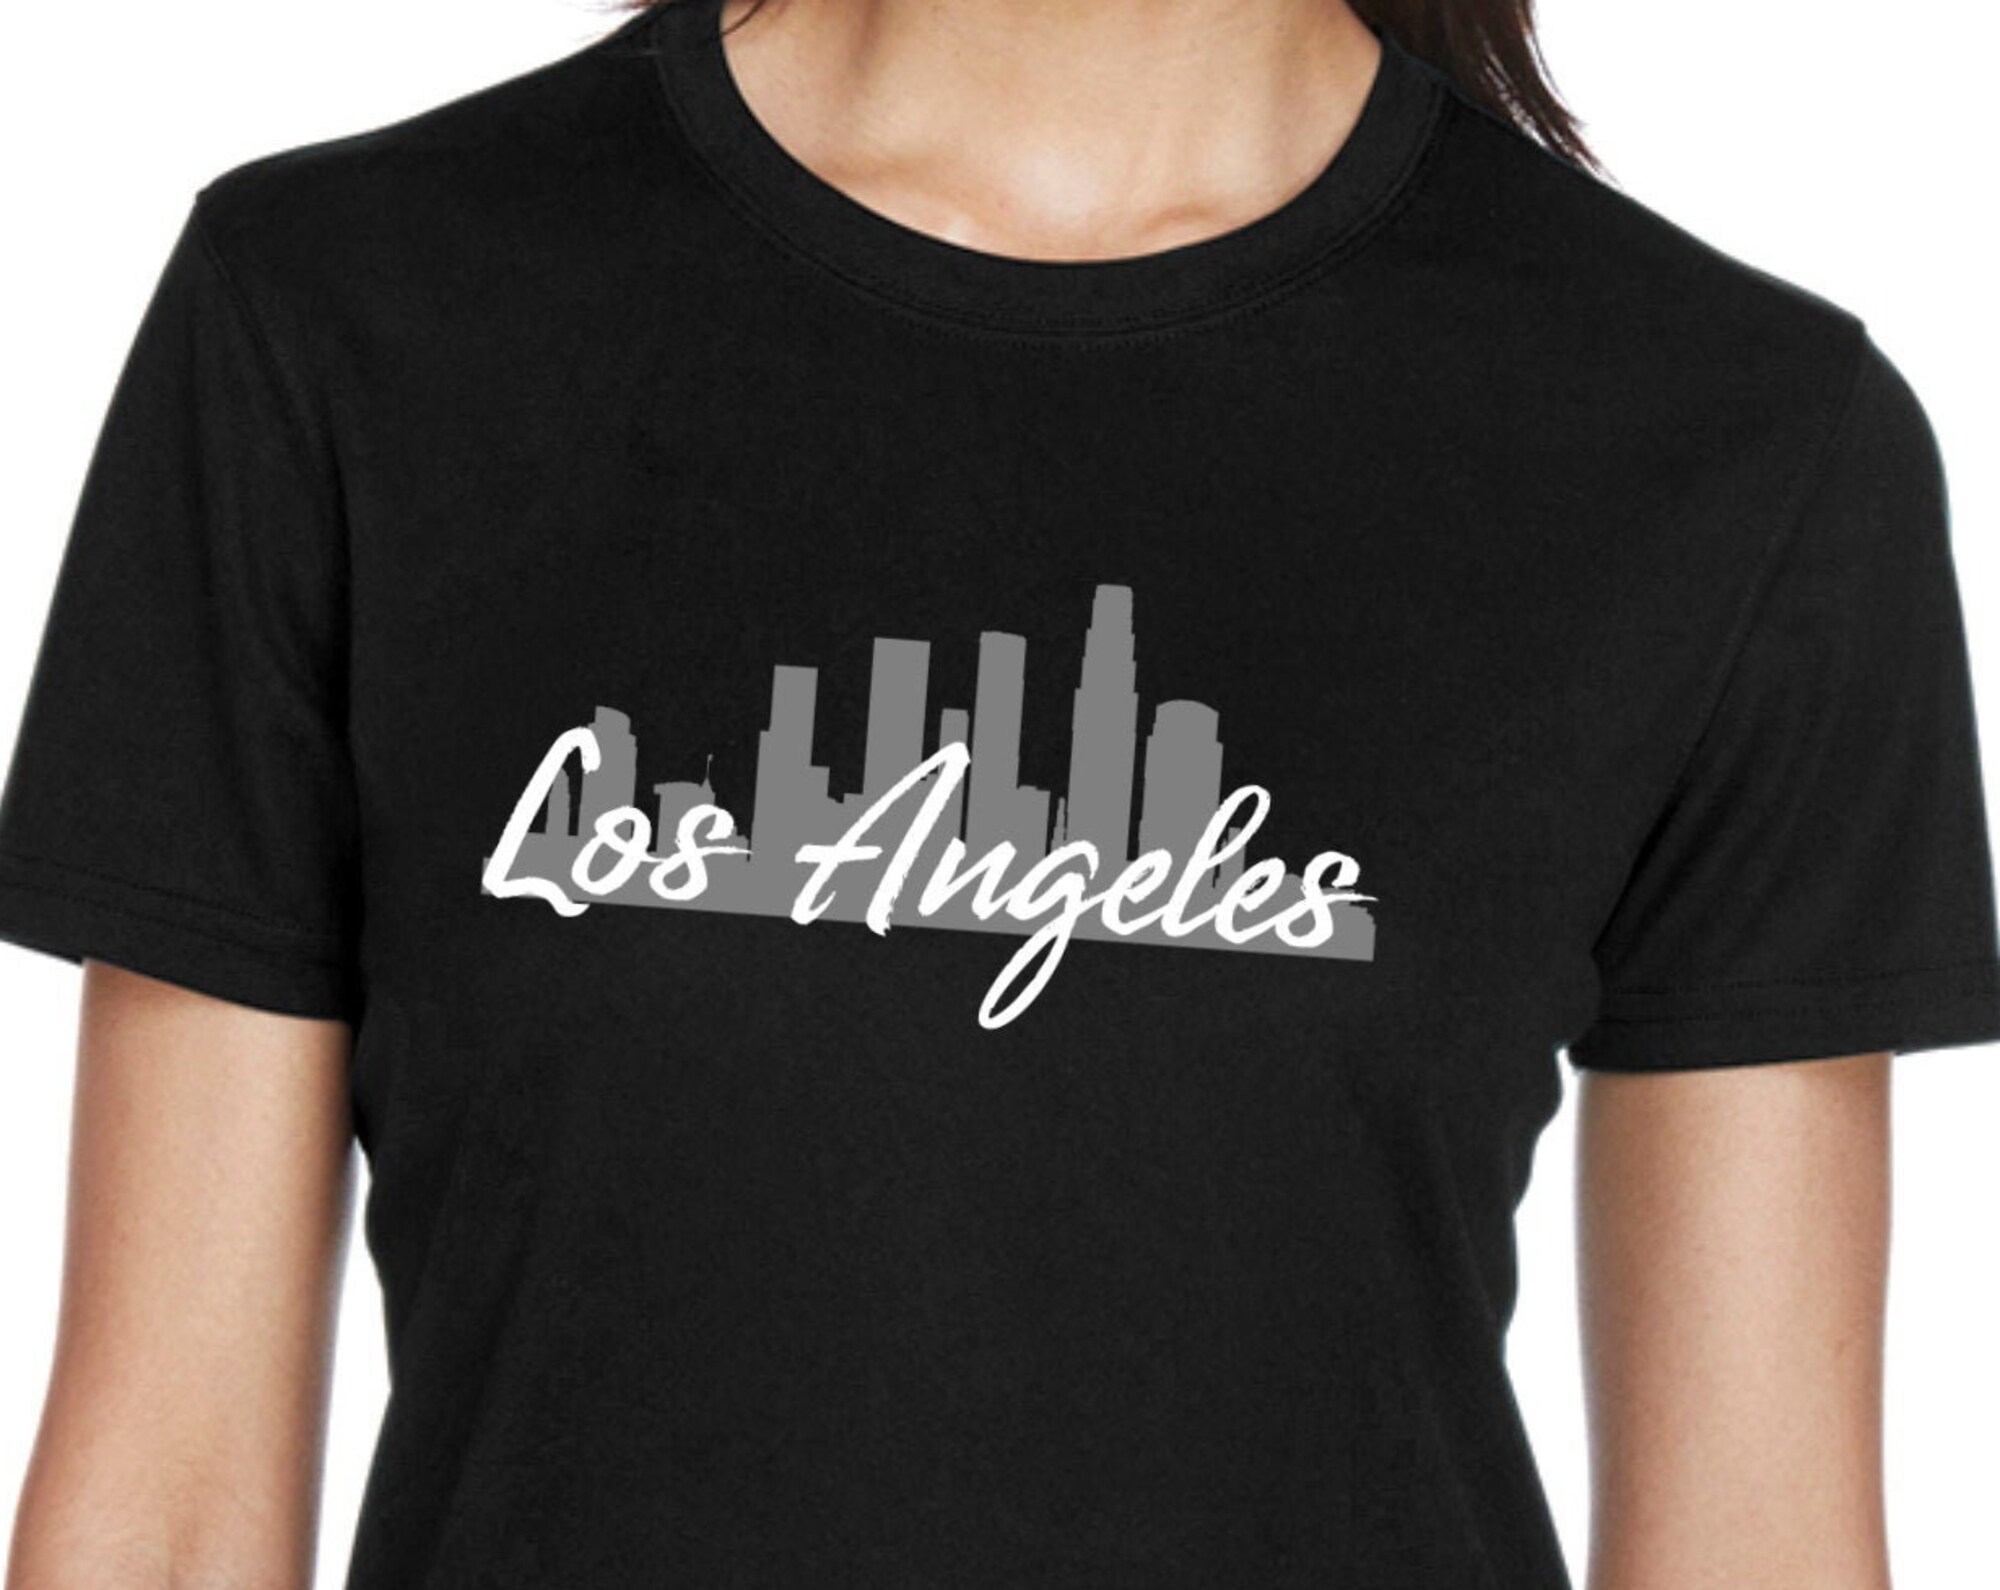 Los Angeles Ladies Shirt Gift, Los Angeles Ladies' shirt